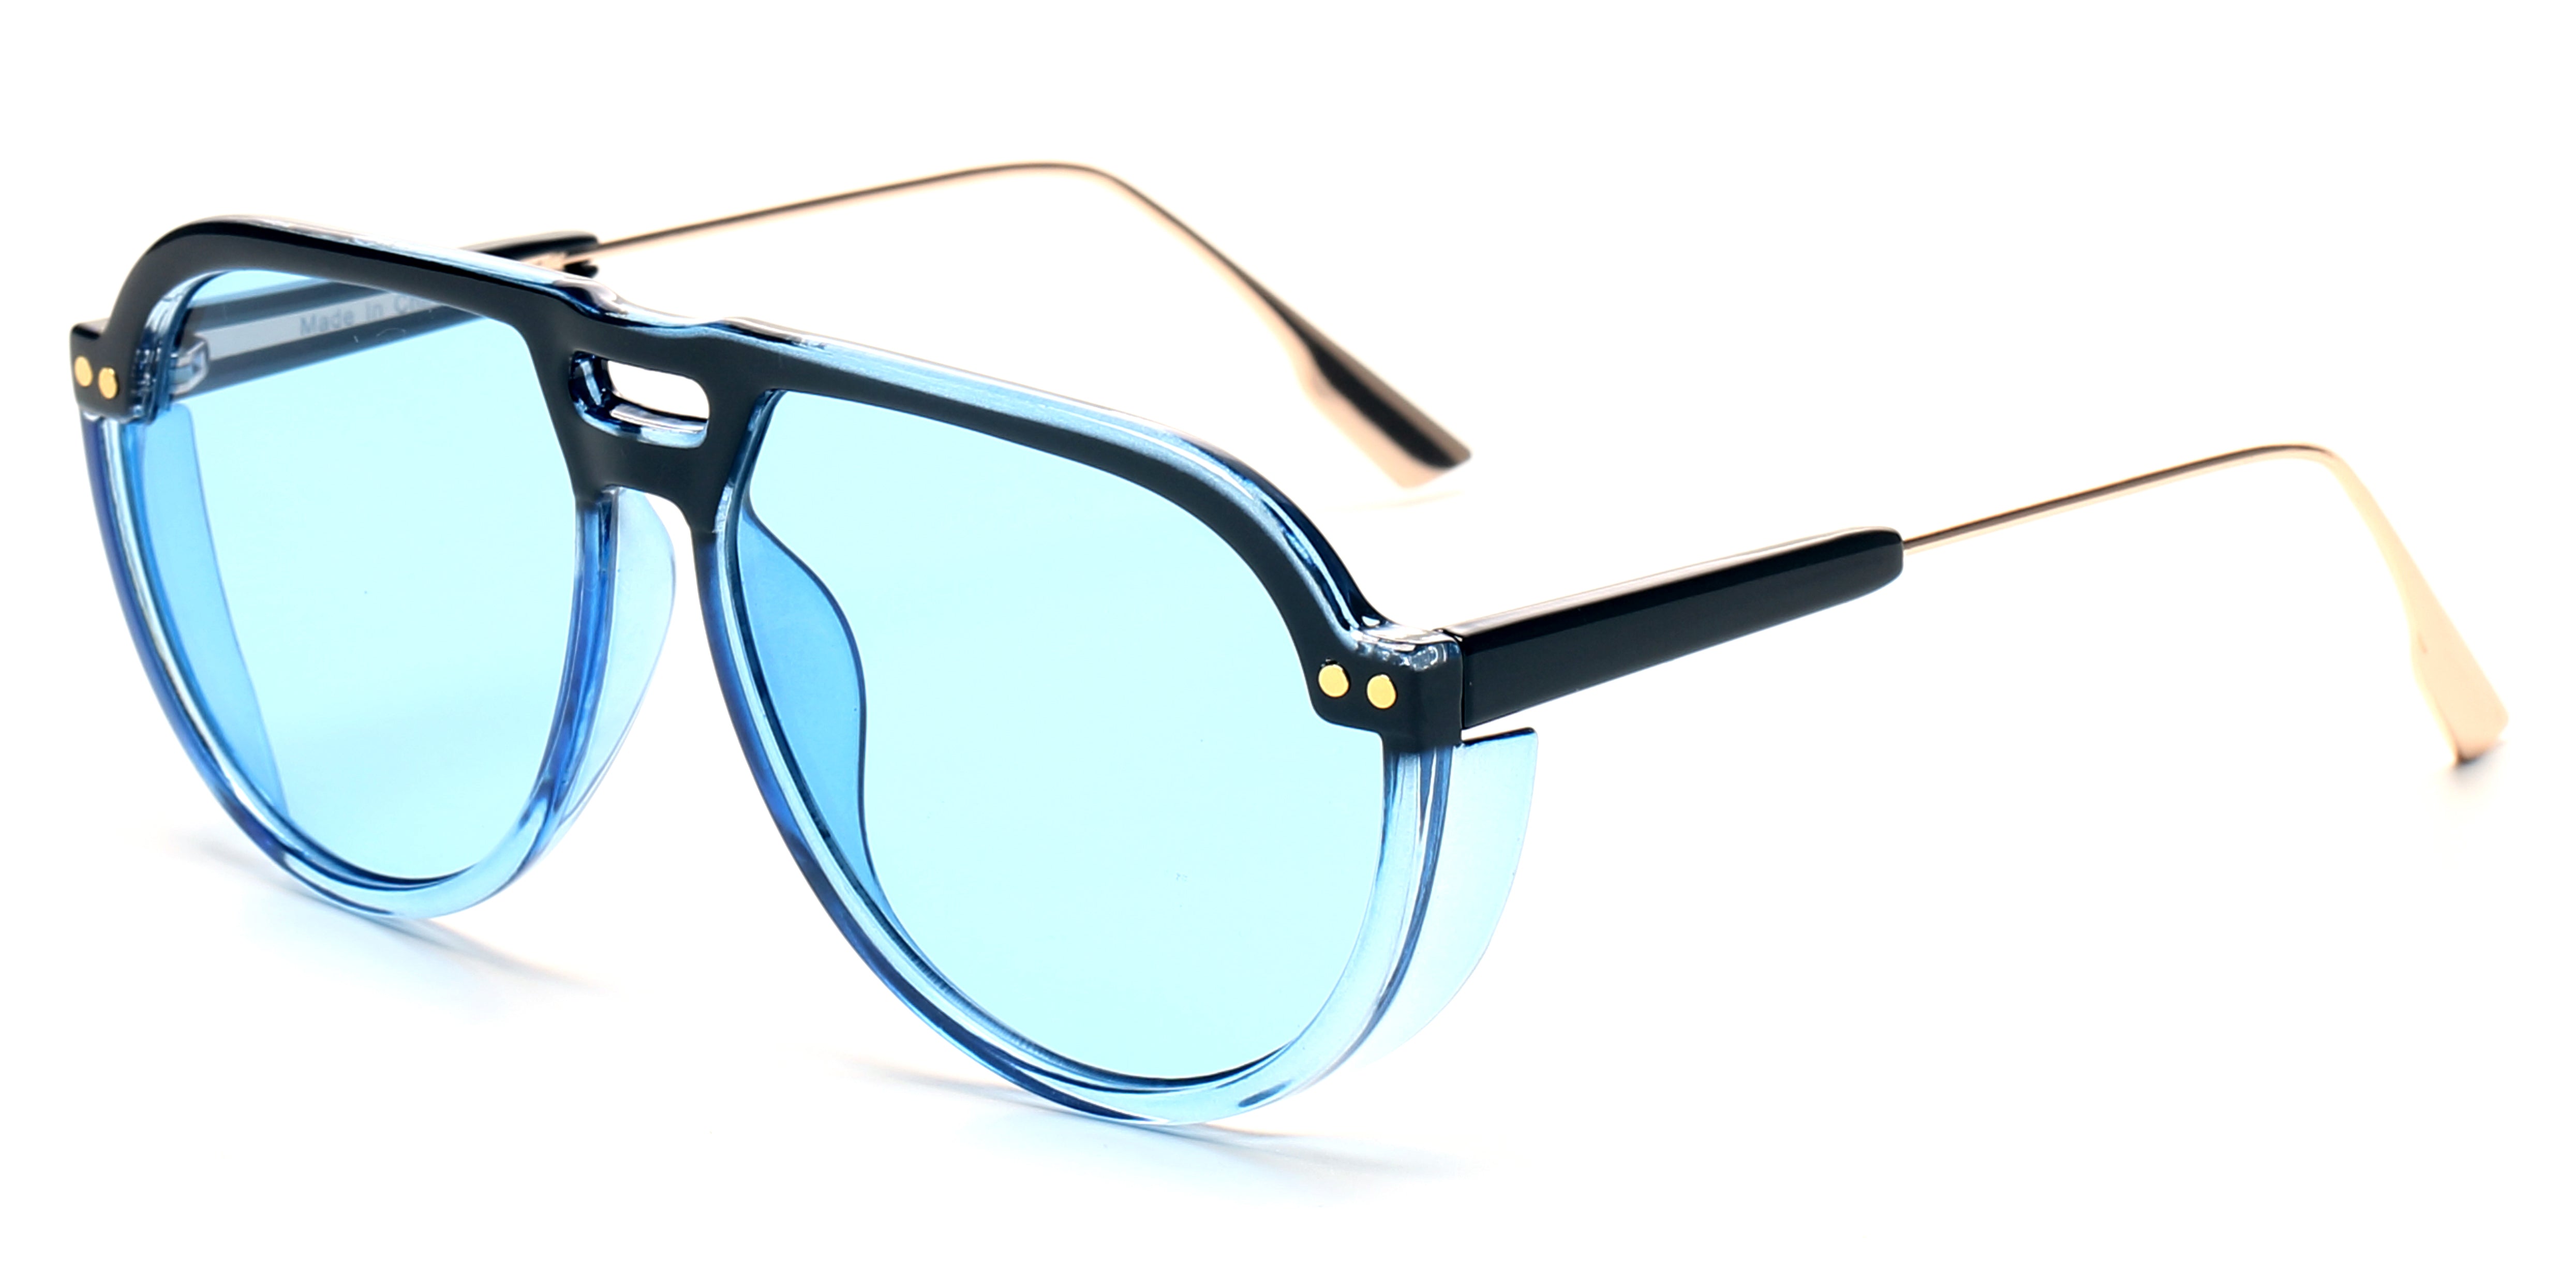 S2080 - Modern Round Aviator Fashion Sunglasses Blue